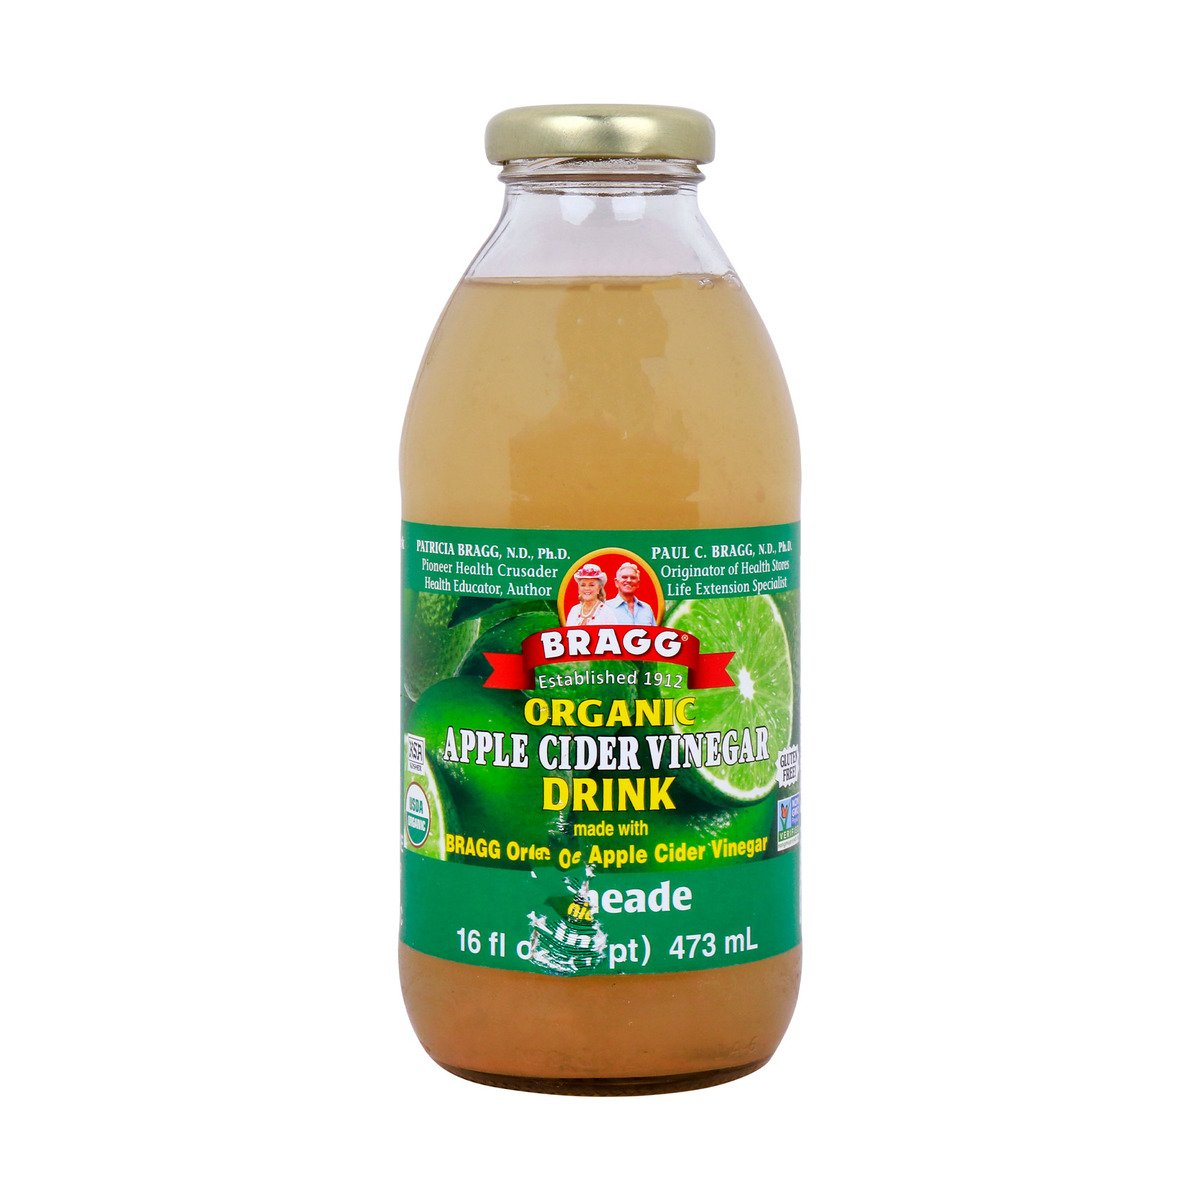 Bragg Organic Apple Cider Vinegar & Limeade Drink 473 ml